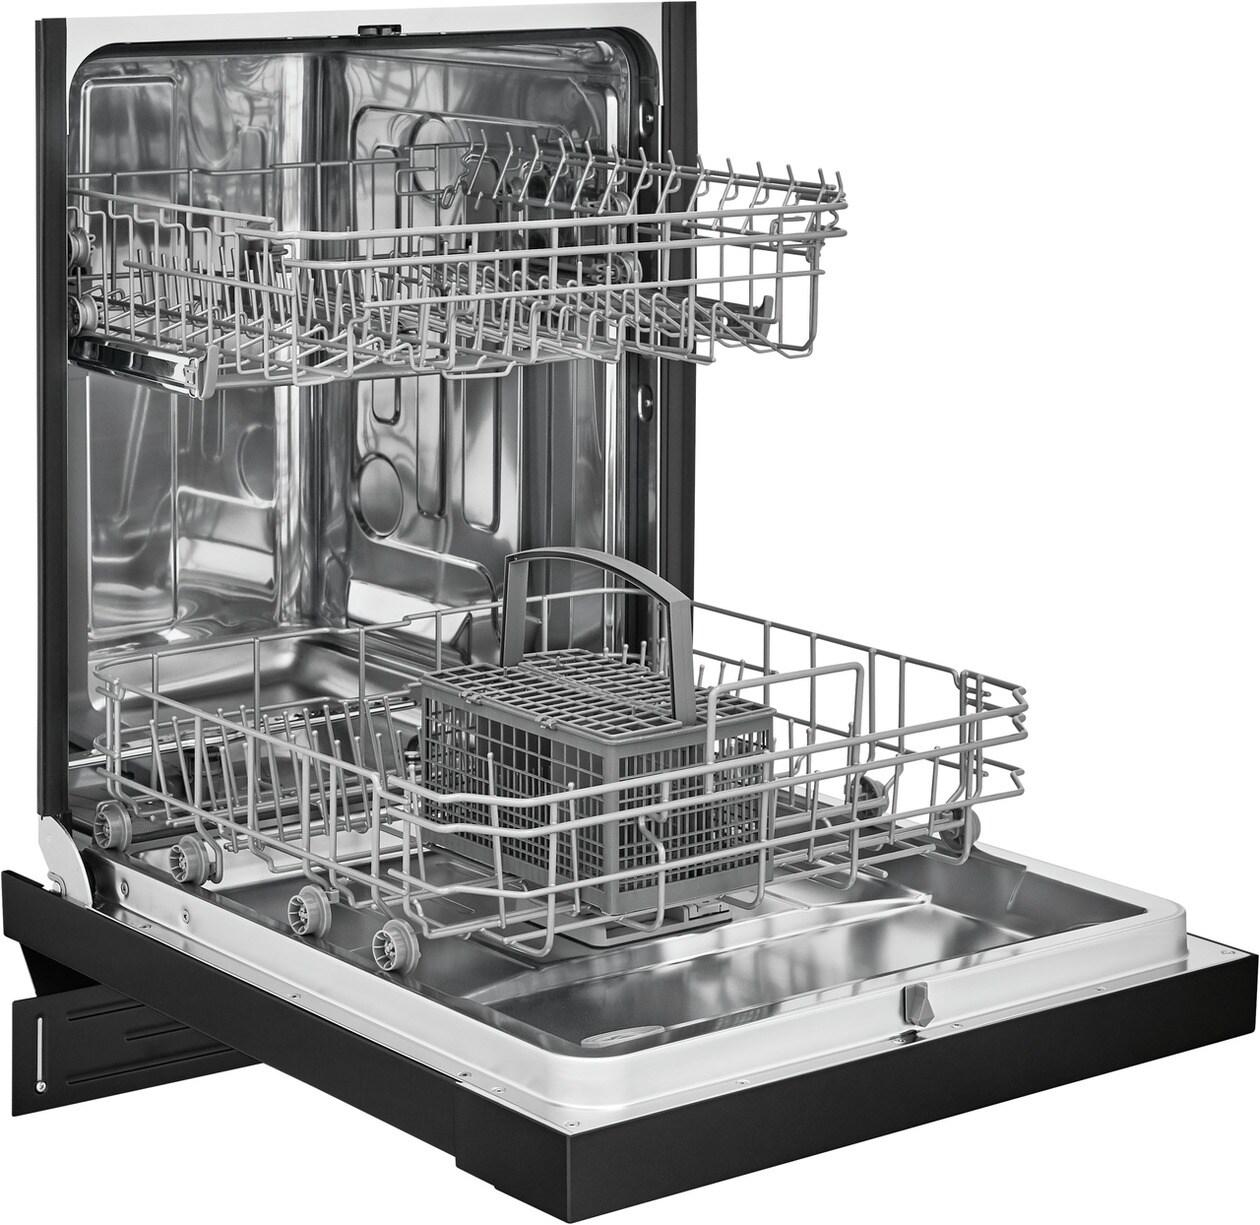 Frigidaire 24" Built-In Dishwasher